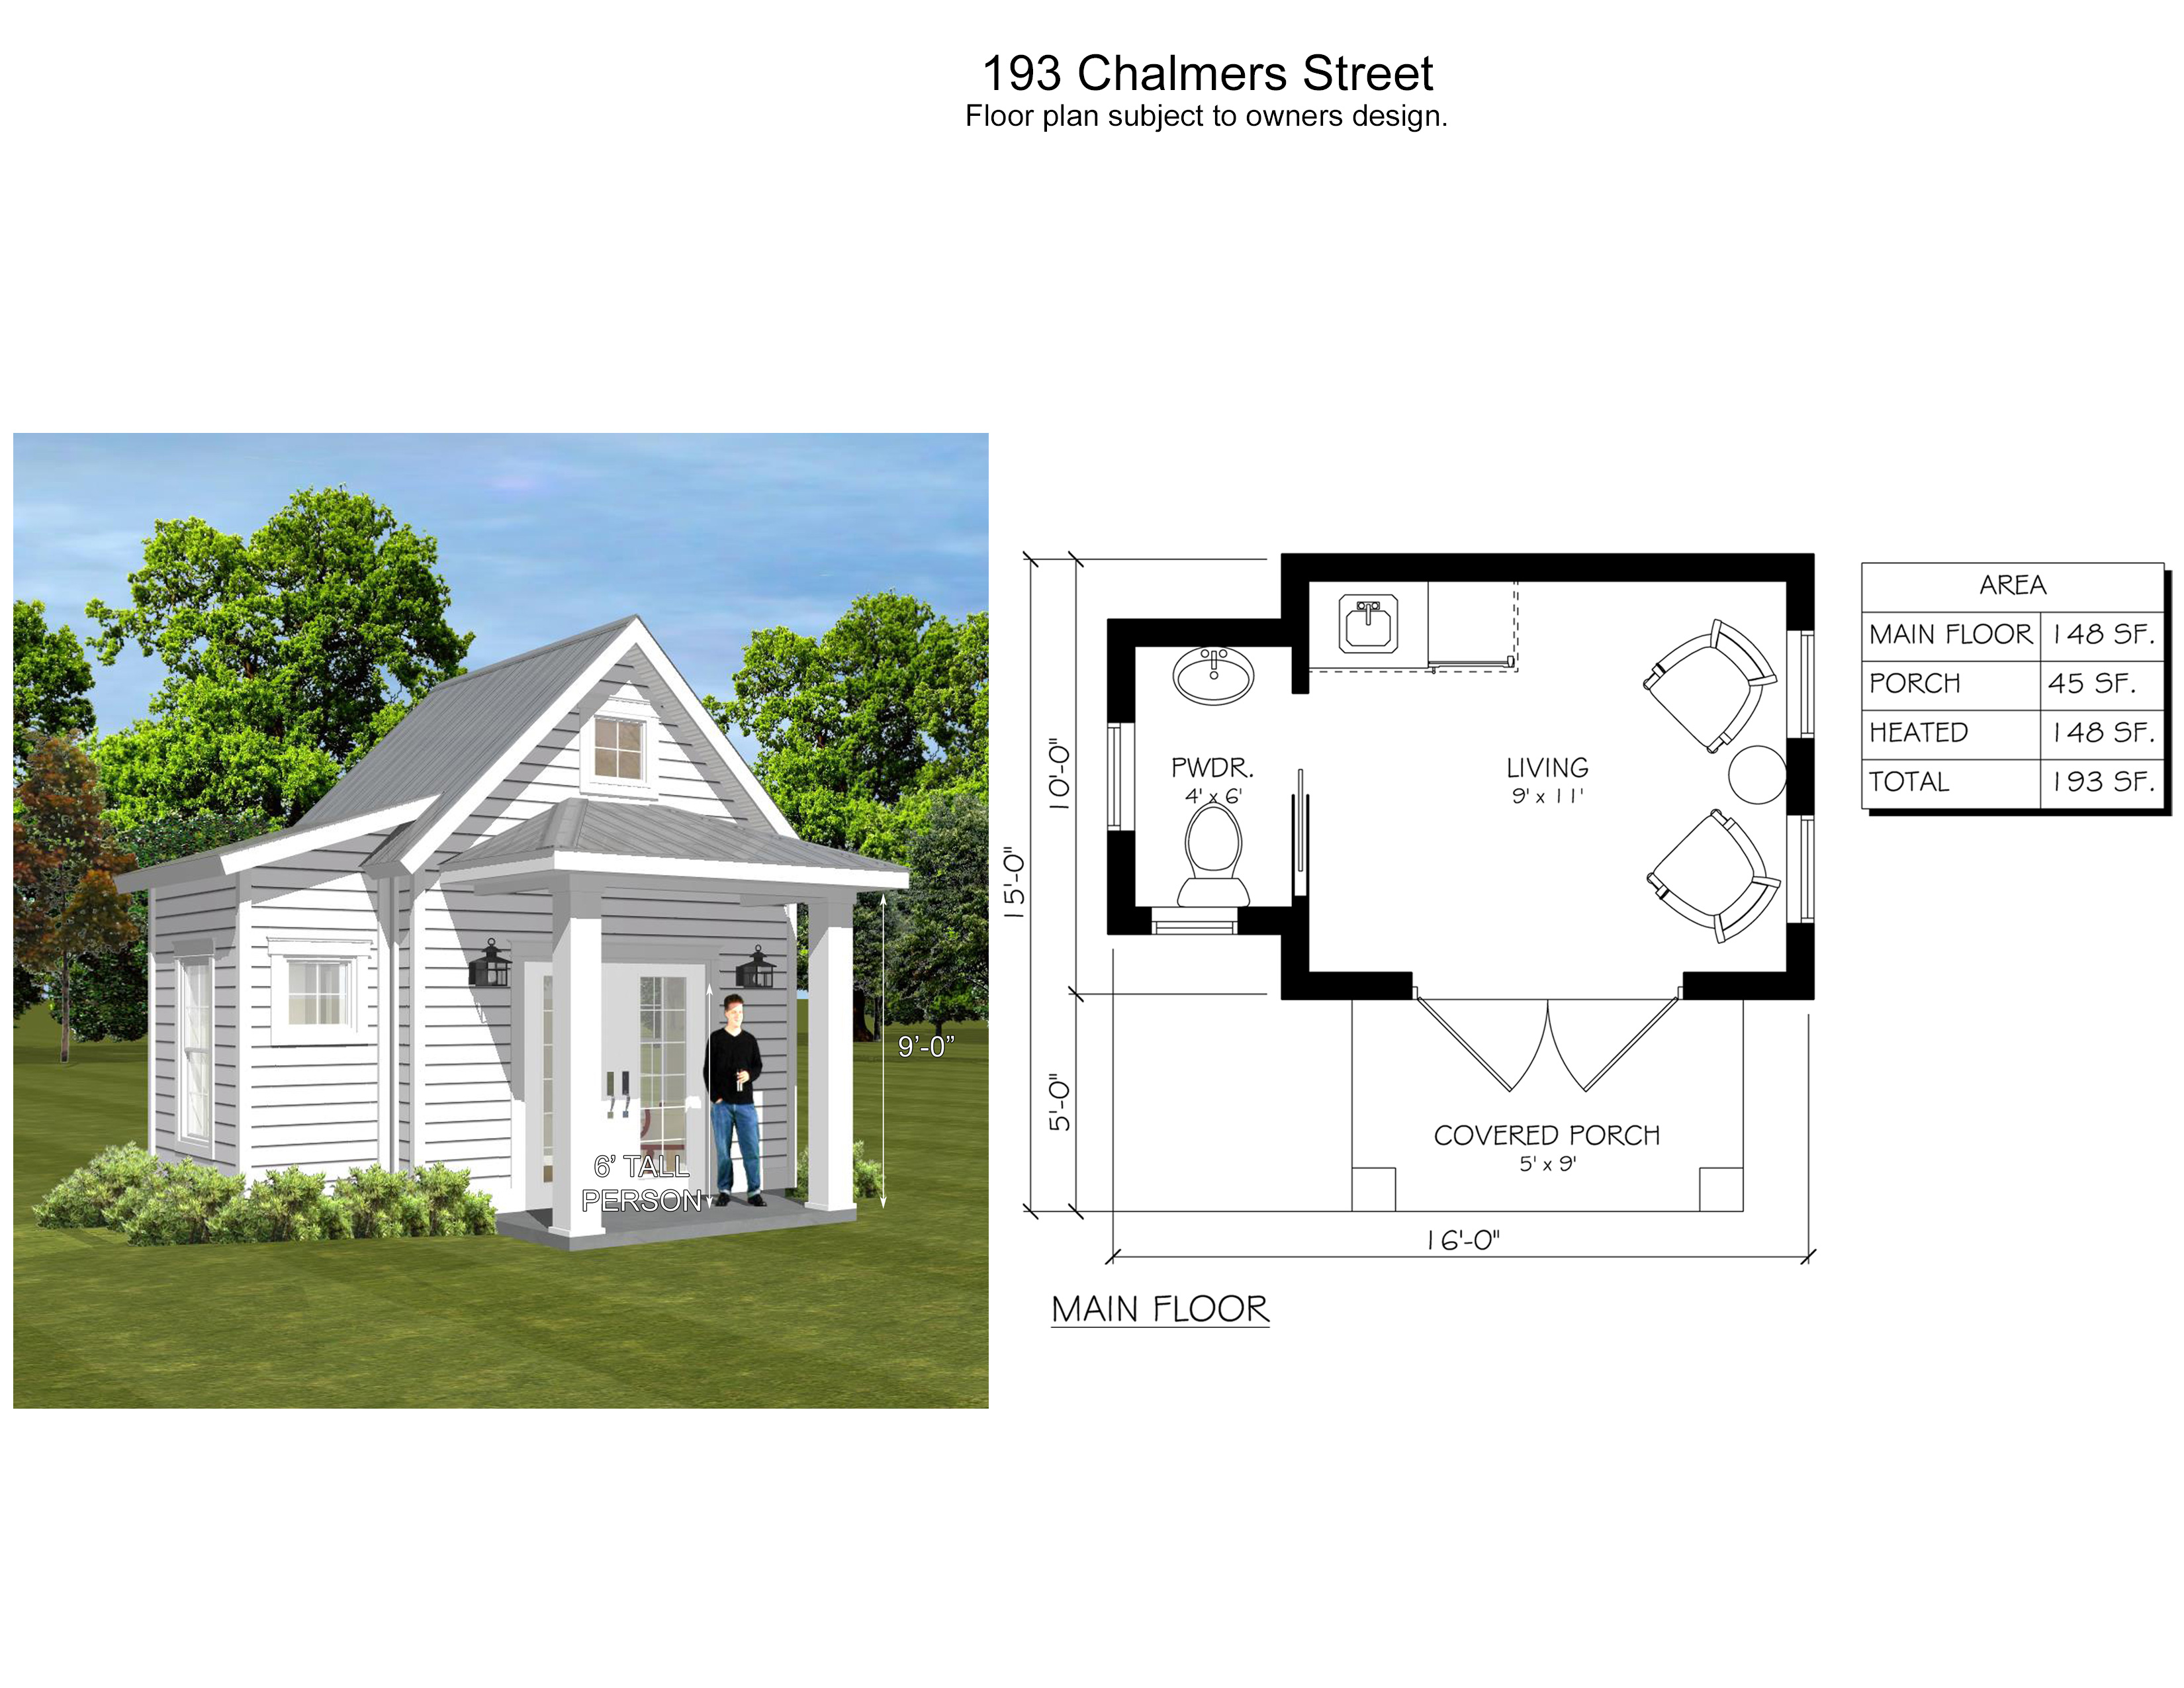 193 Chalmers Street Floor Plan